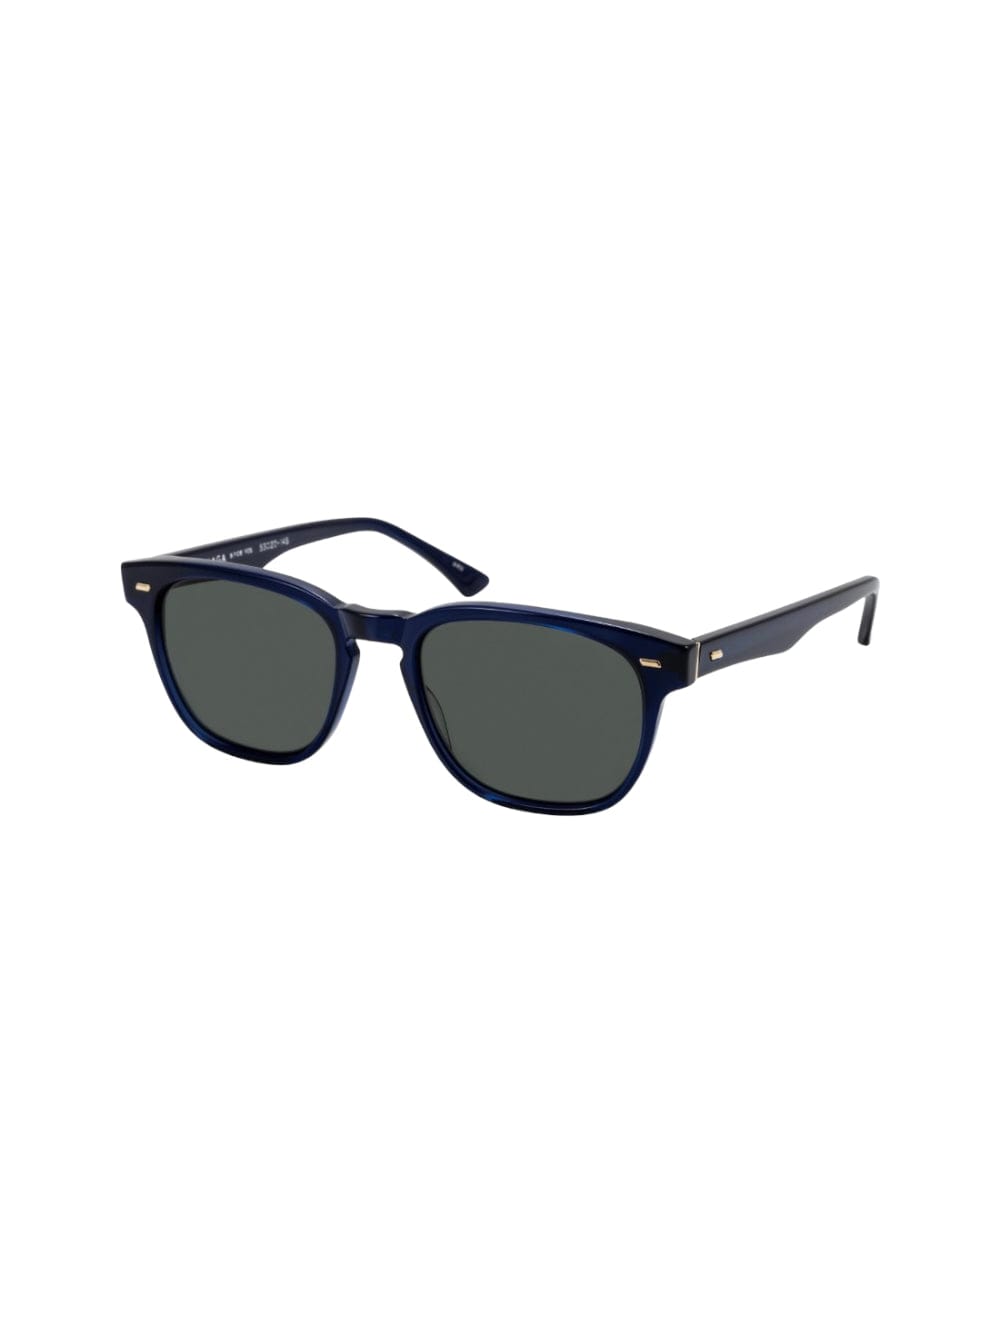 Masunaga 080 - Trasparent Blue Sunglasses